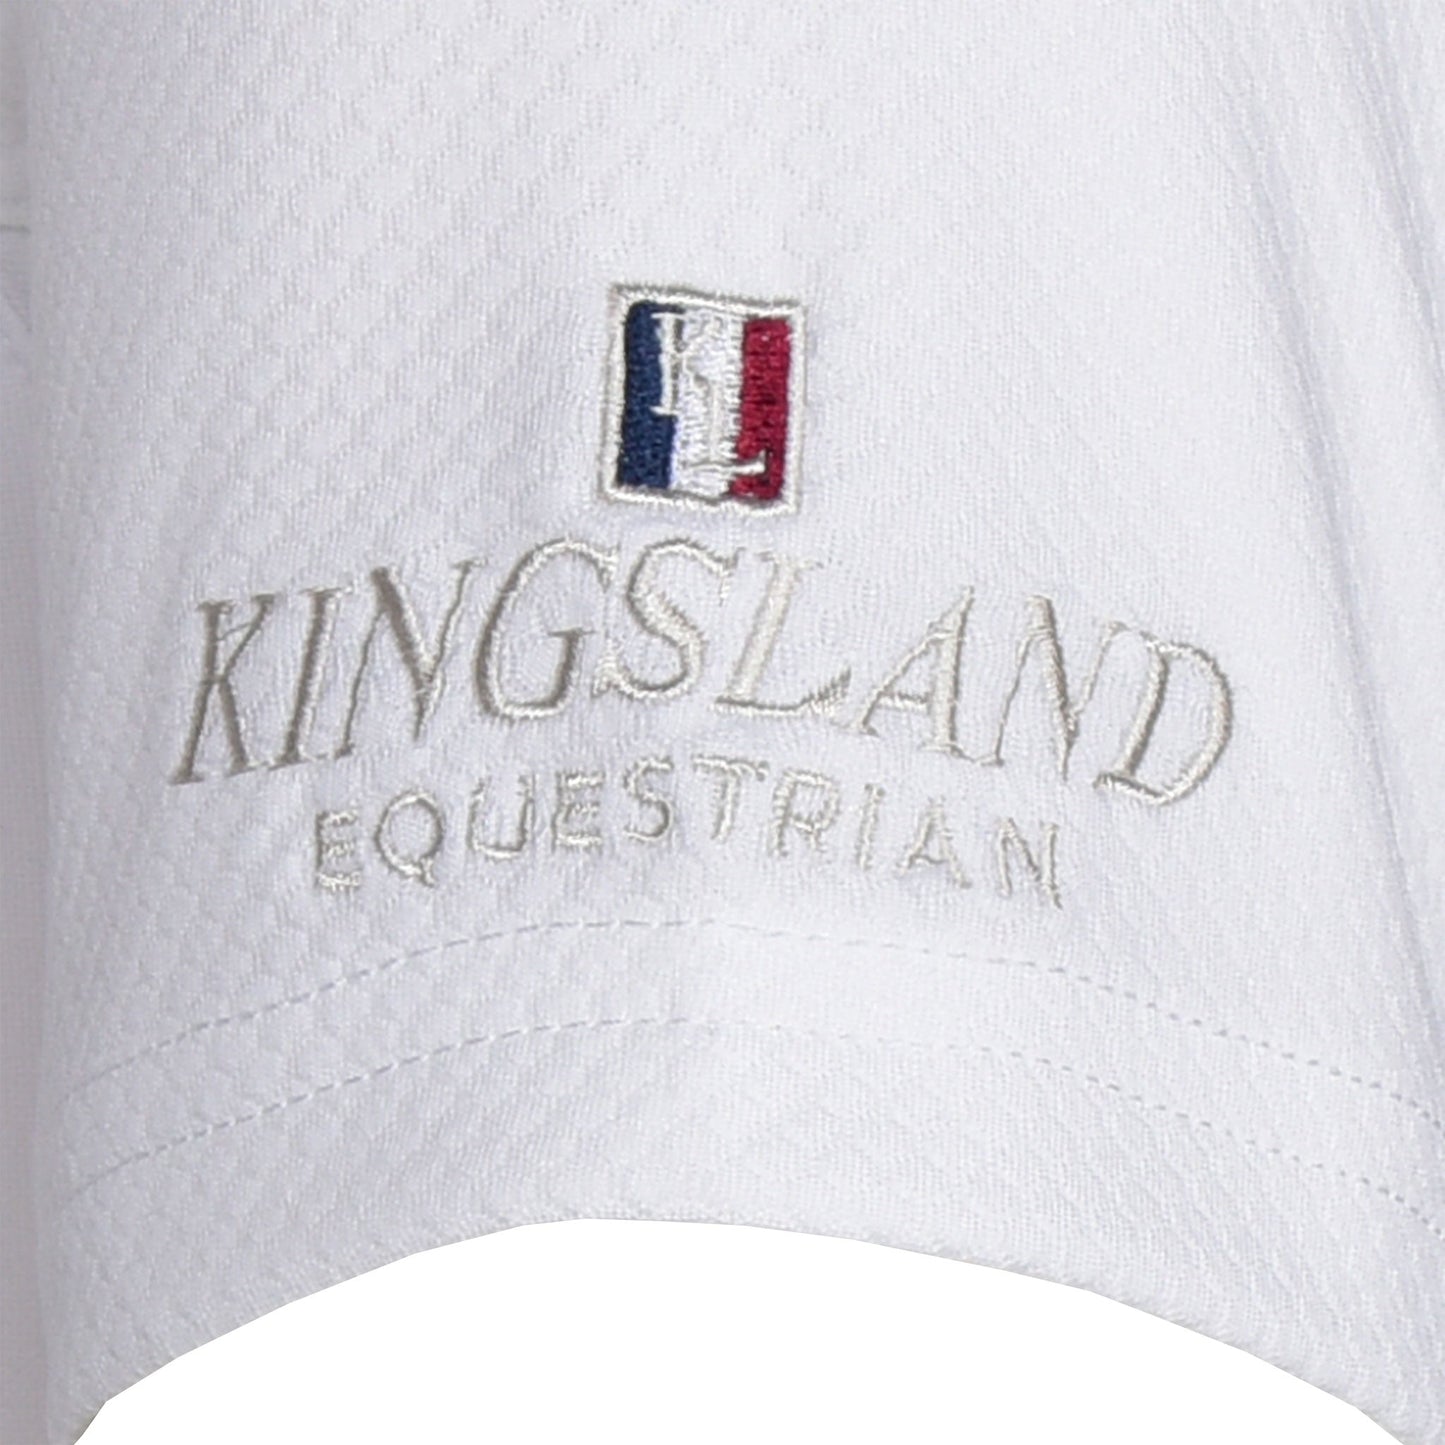 Kingsland Boys Short Sleeve Show Shirt